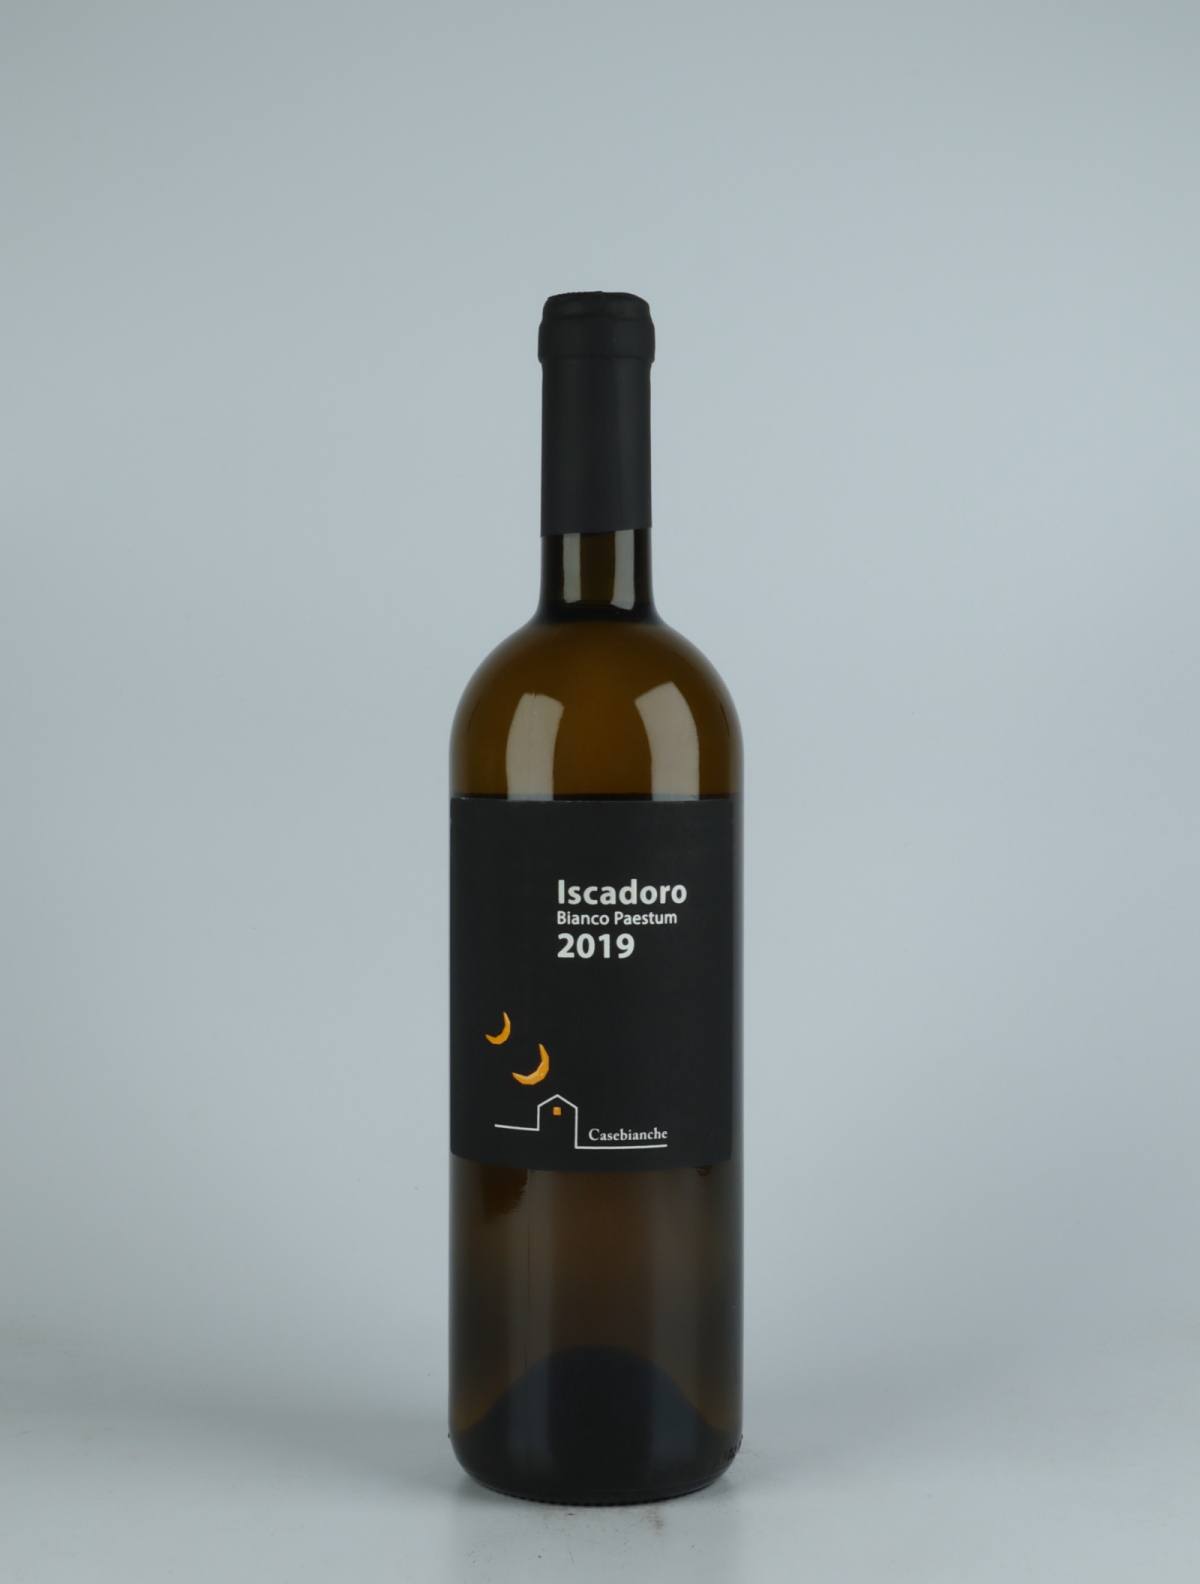 A bottle  Iscadoro Orange wine from Casebianche, Campania in Italy